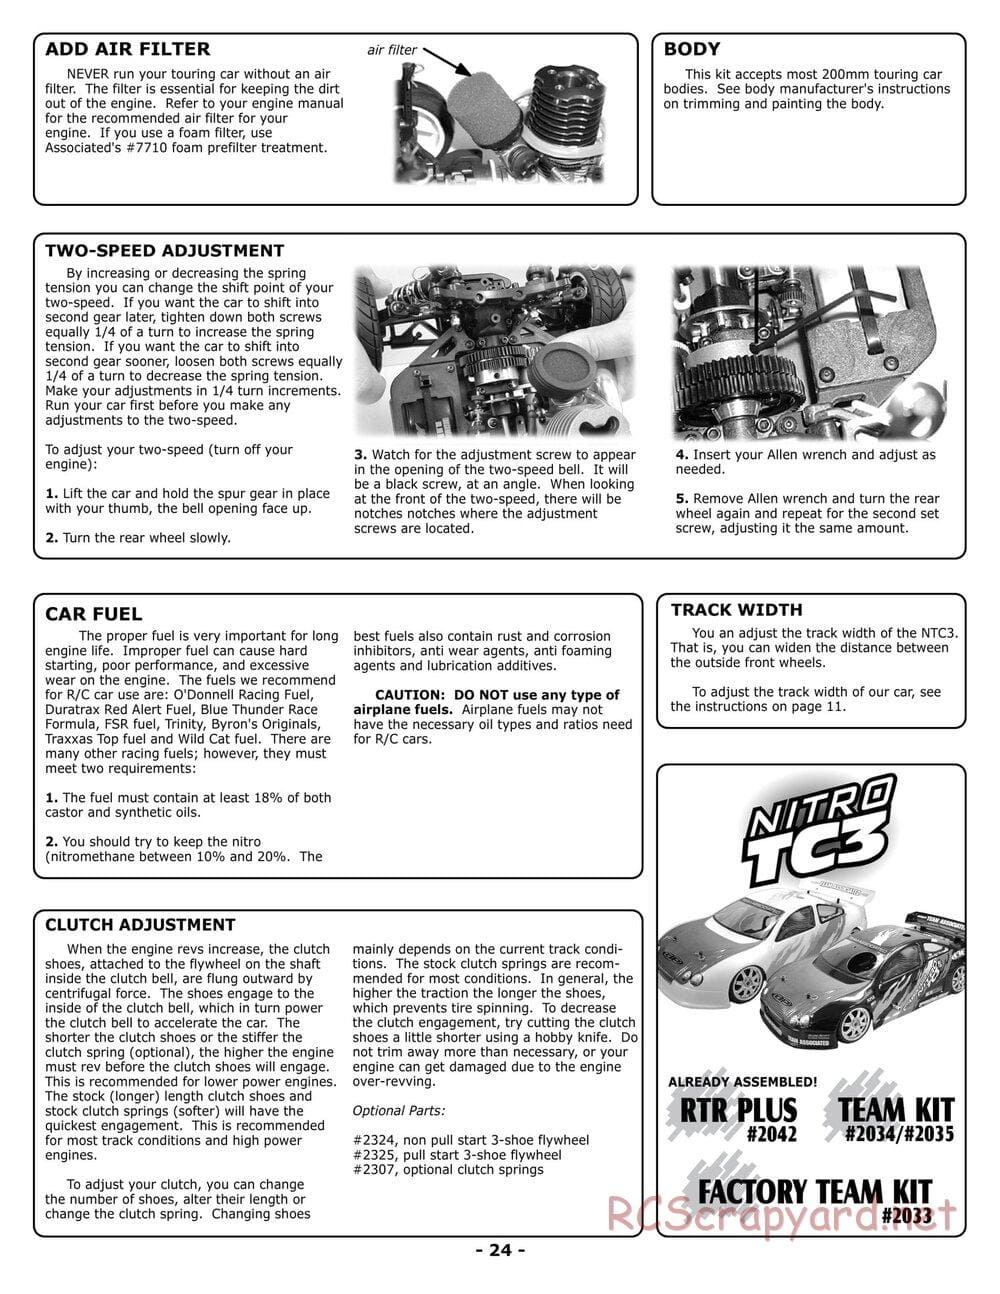 Team Associated - NTC3 RTR Plus / Factory Team / Team - Manual - Page 24